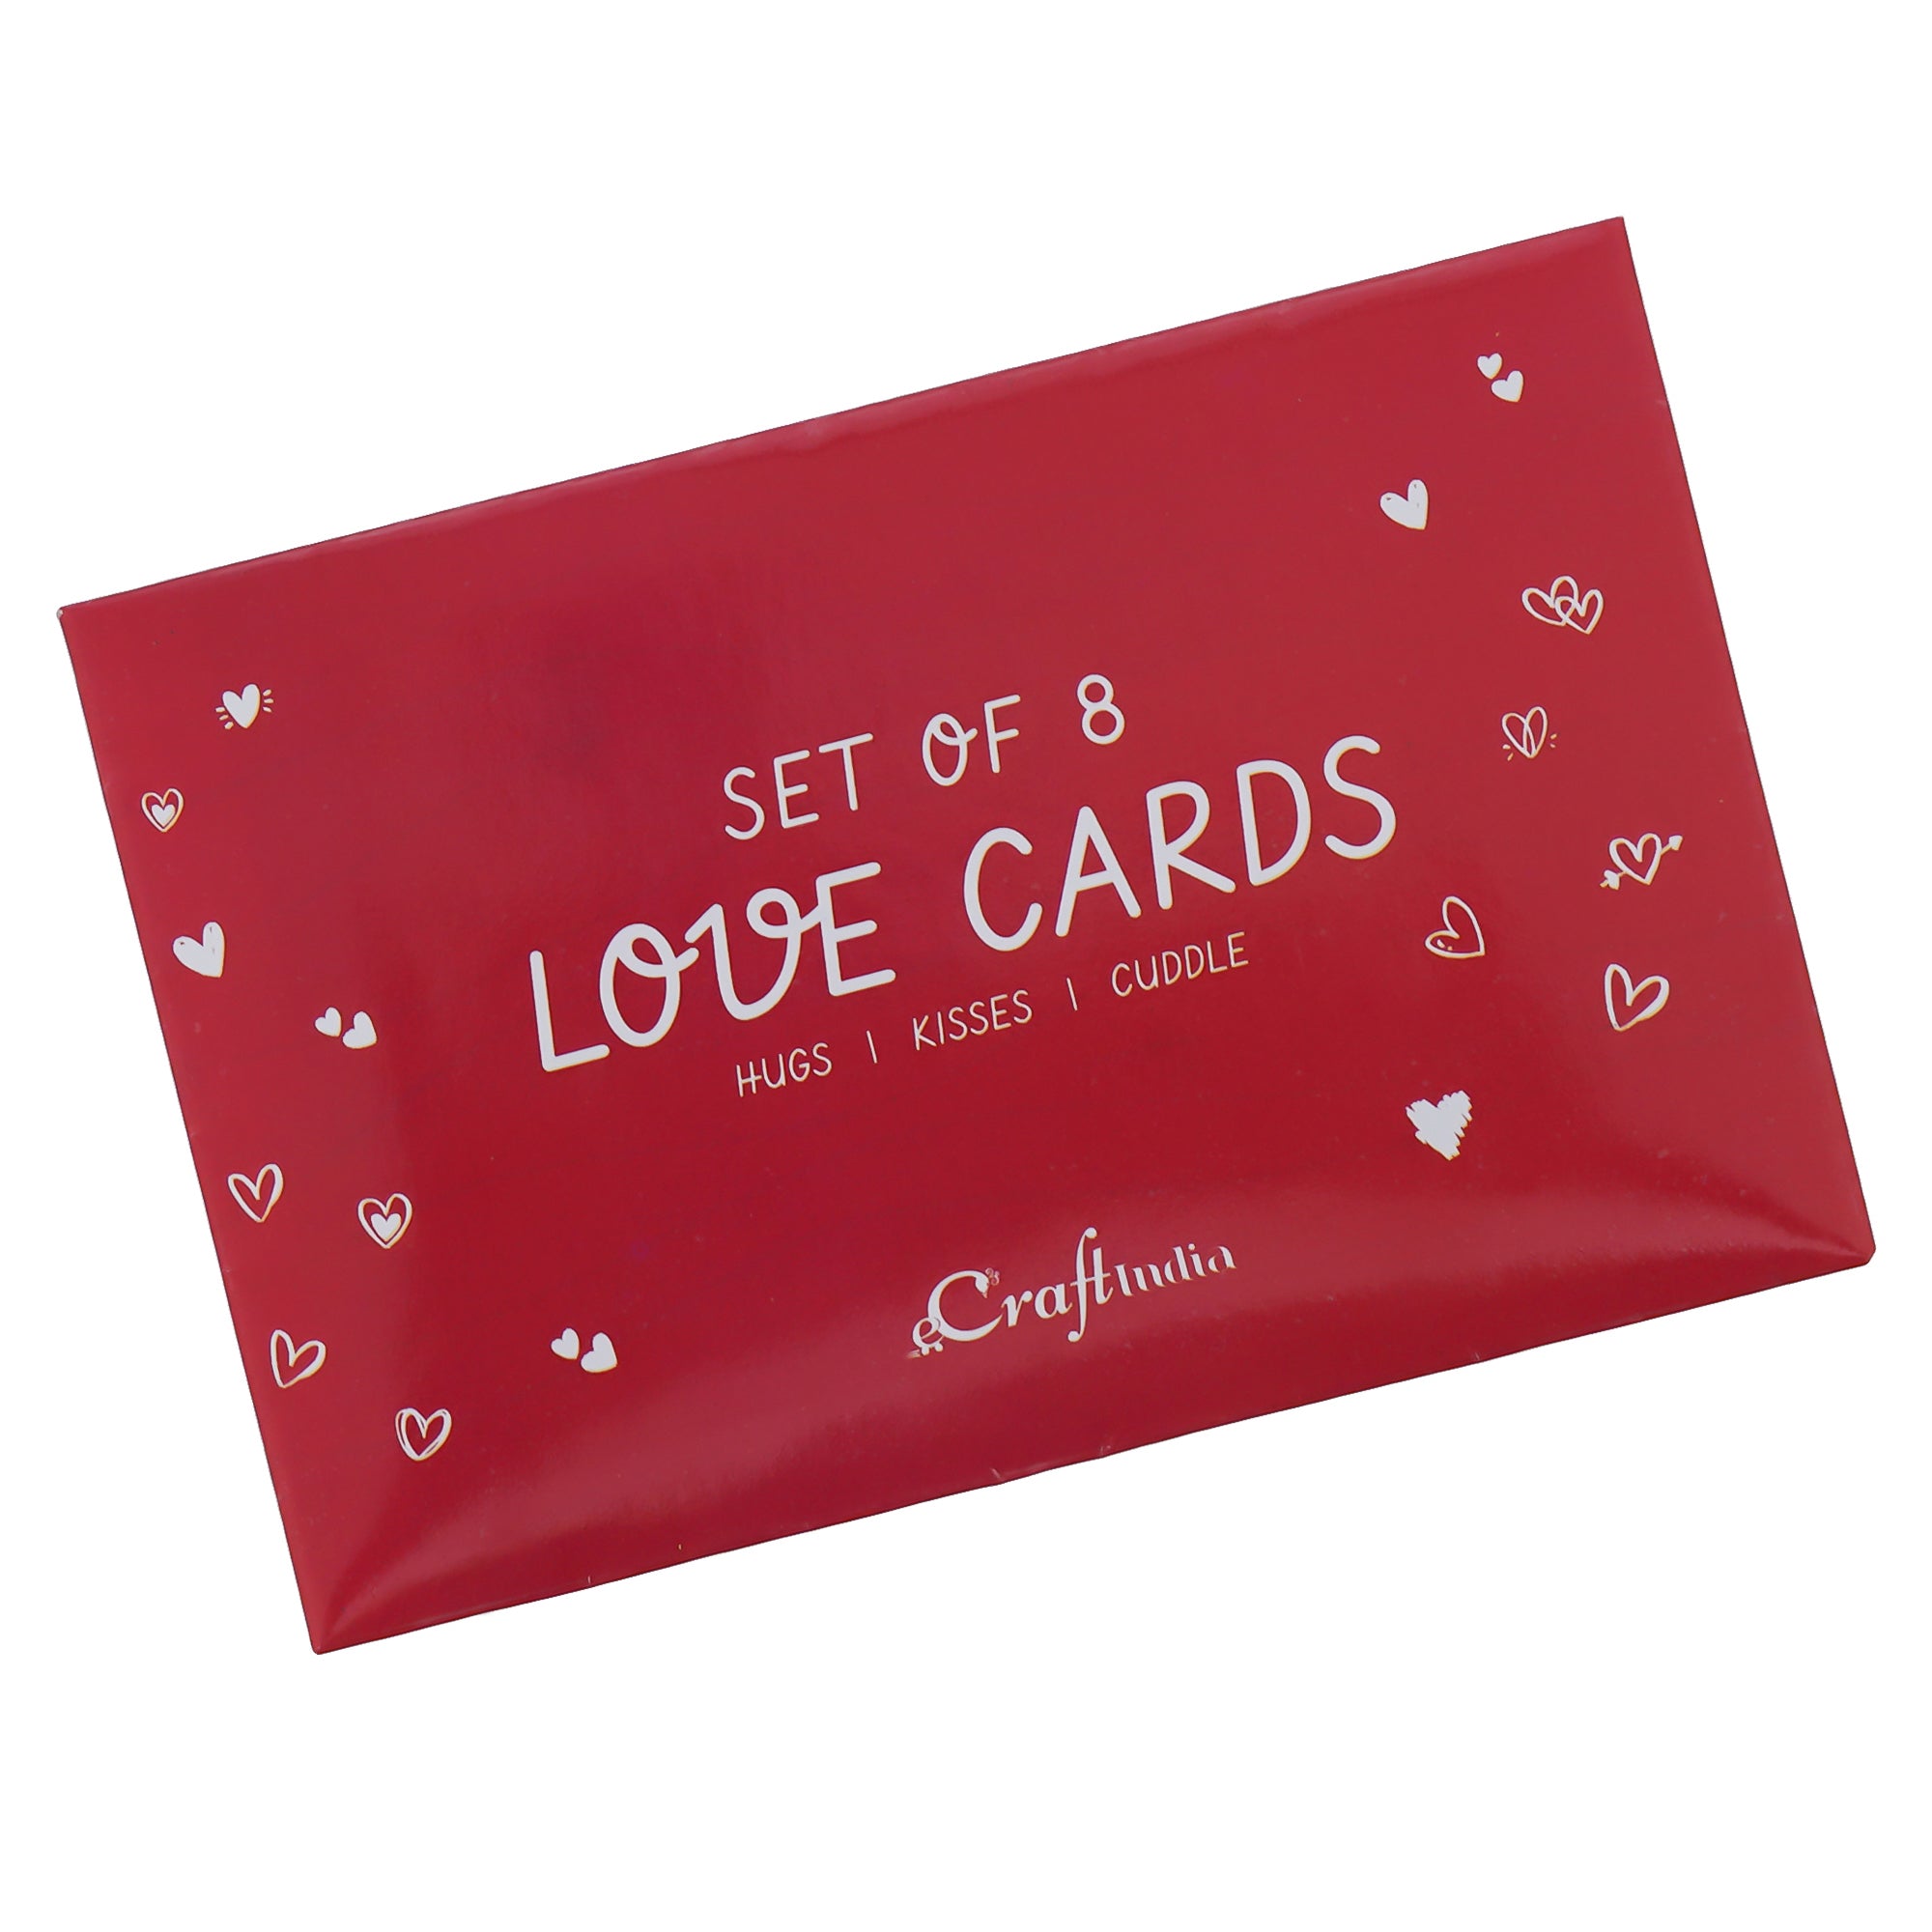 Valentine Combo of Pack of 8 Love Gift Cards, Golden Rose Gift Set, Wooden Box "For You" Message Bottle Set 7